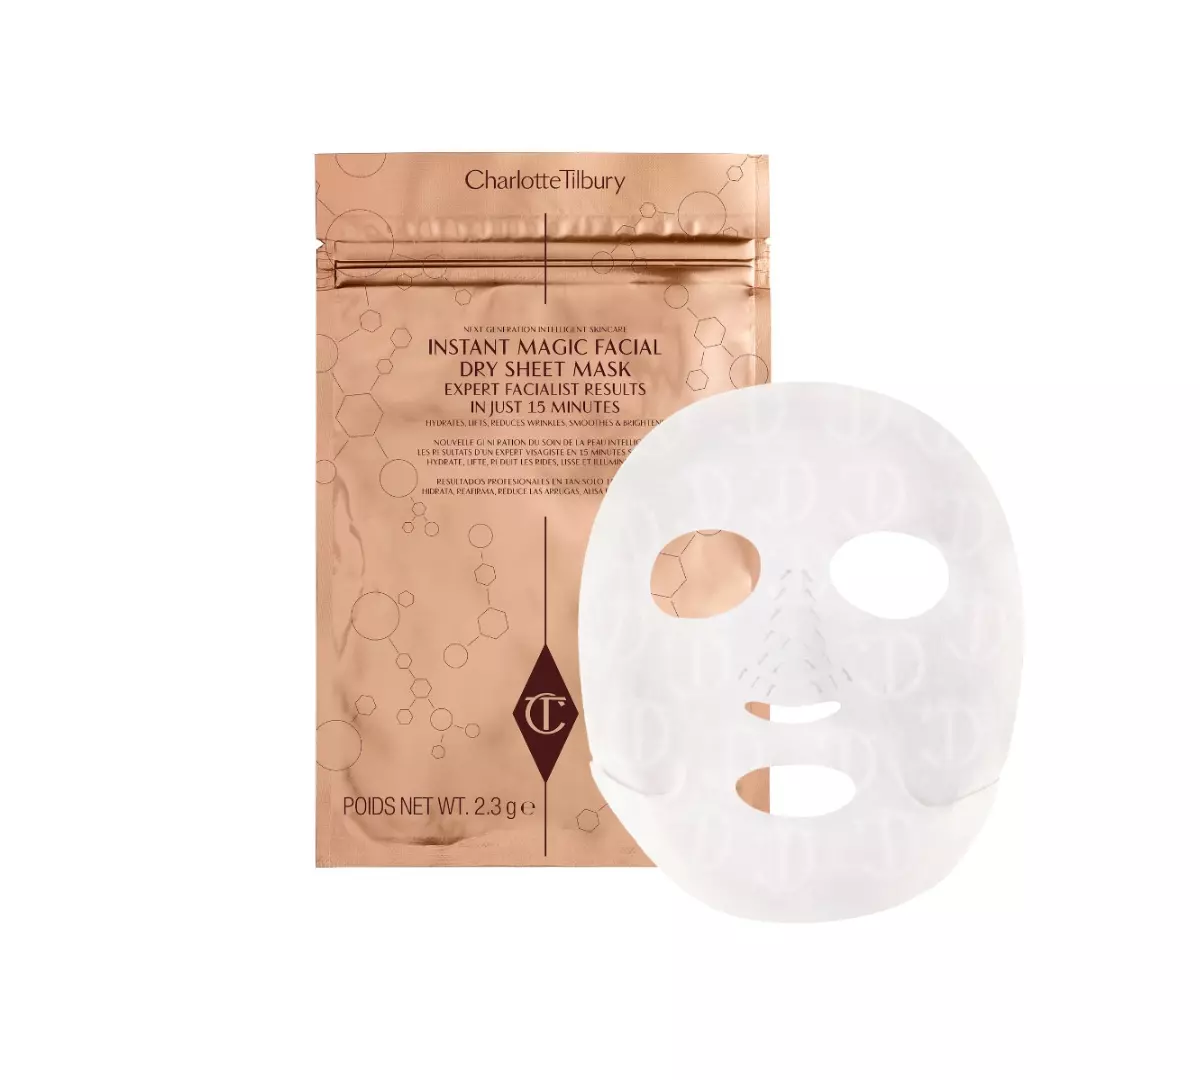 Mascarilla Instant magic facial dry sheet mask de Charlotte Tilbury